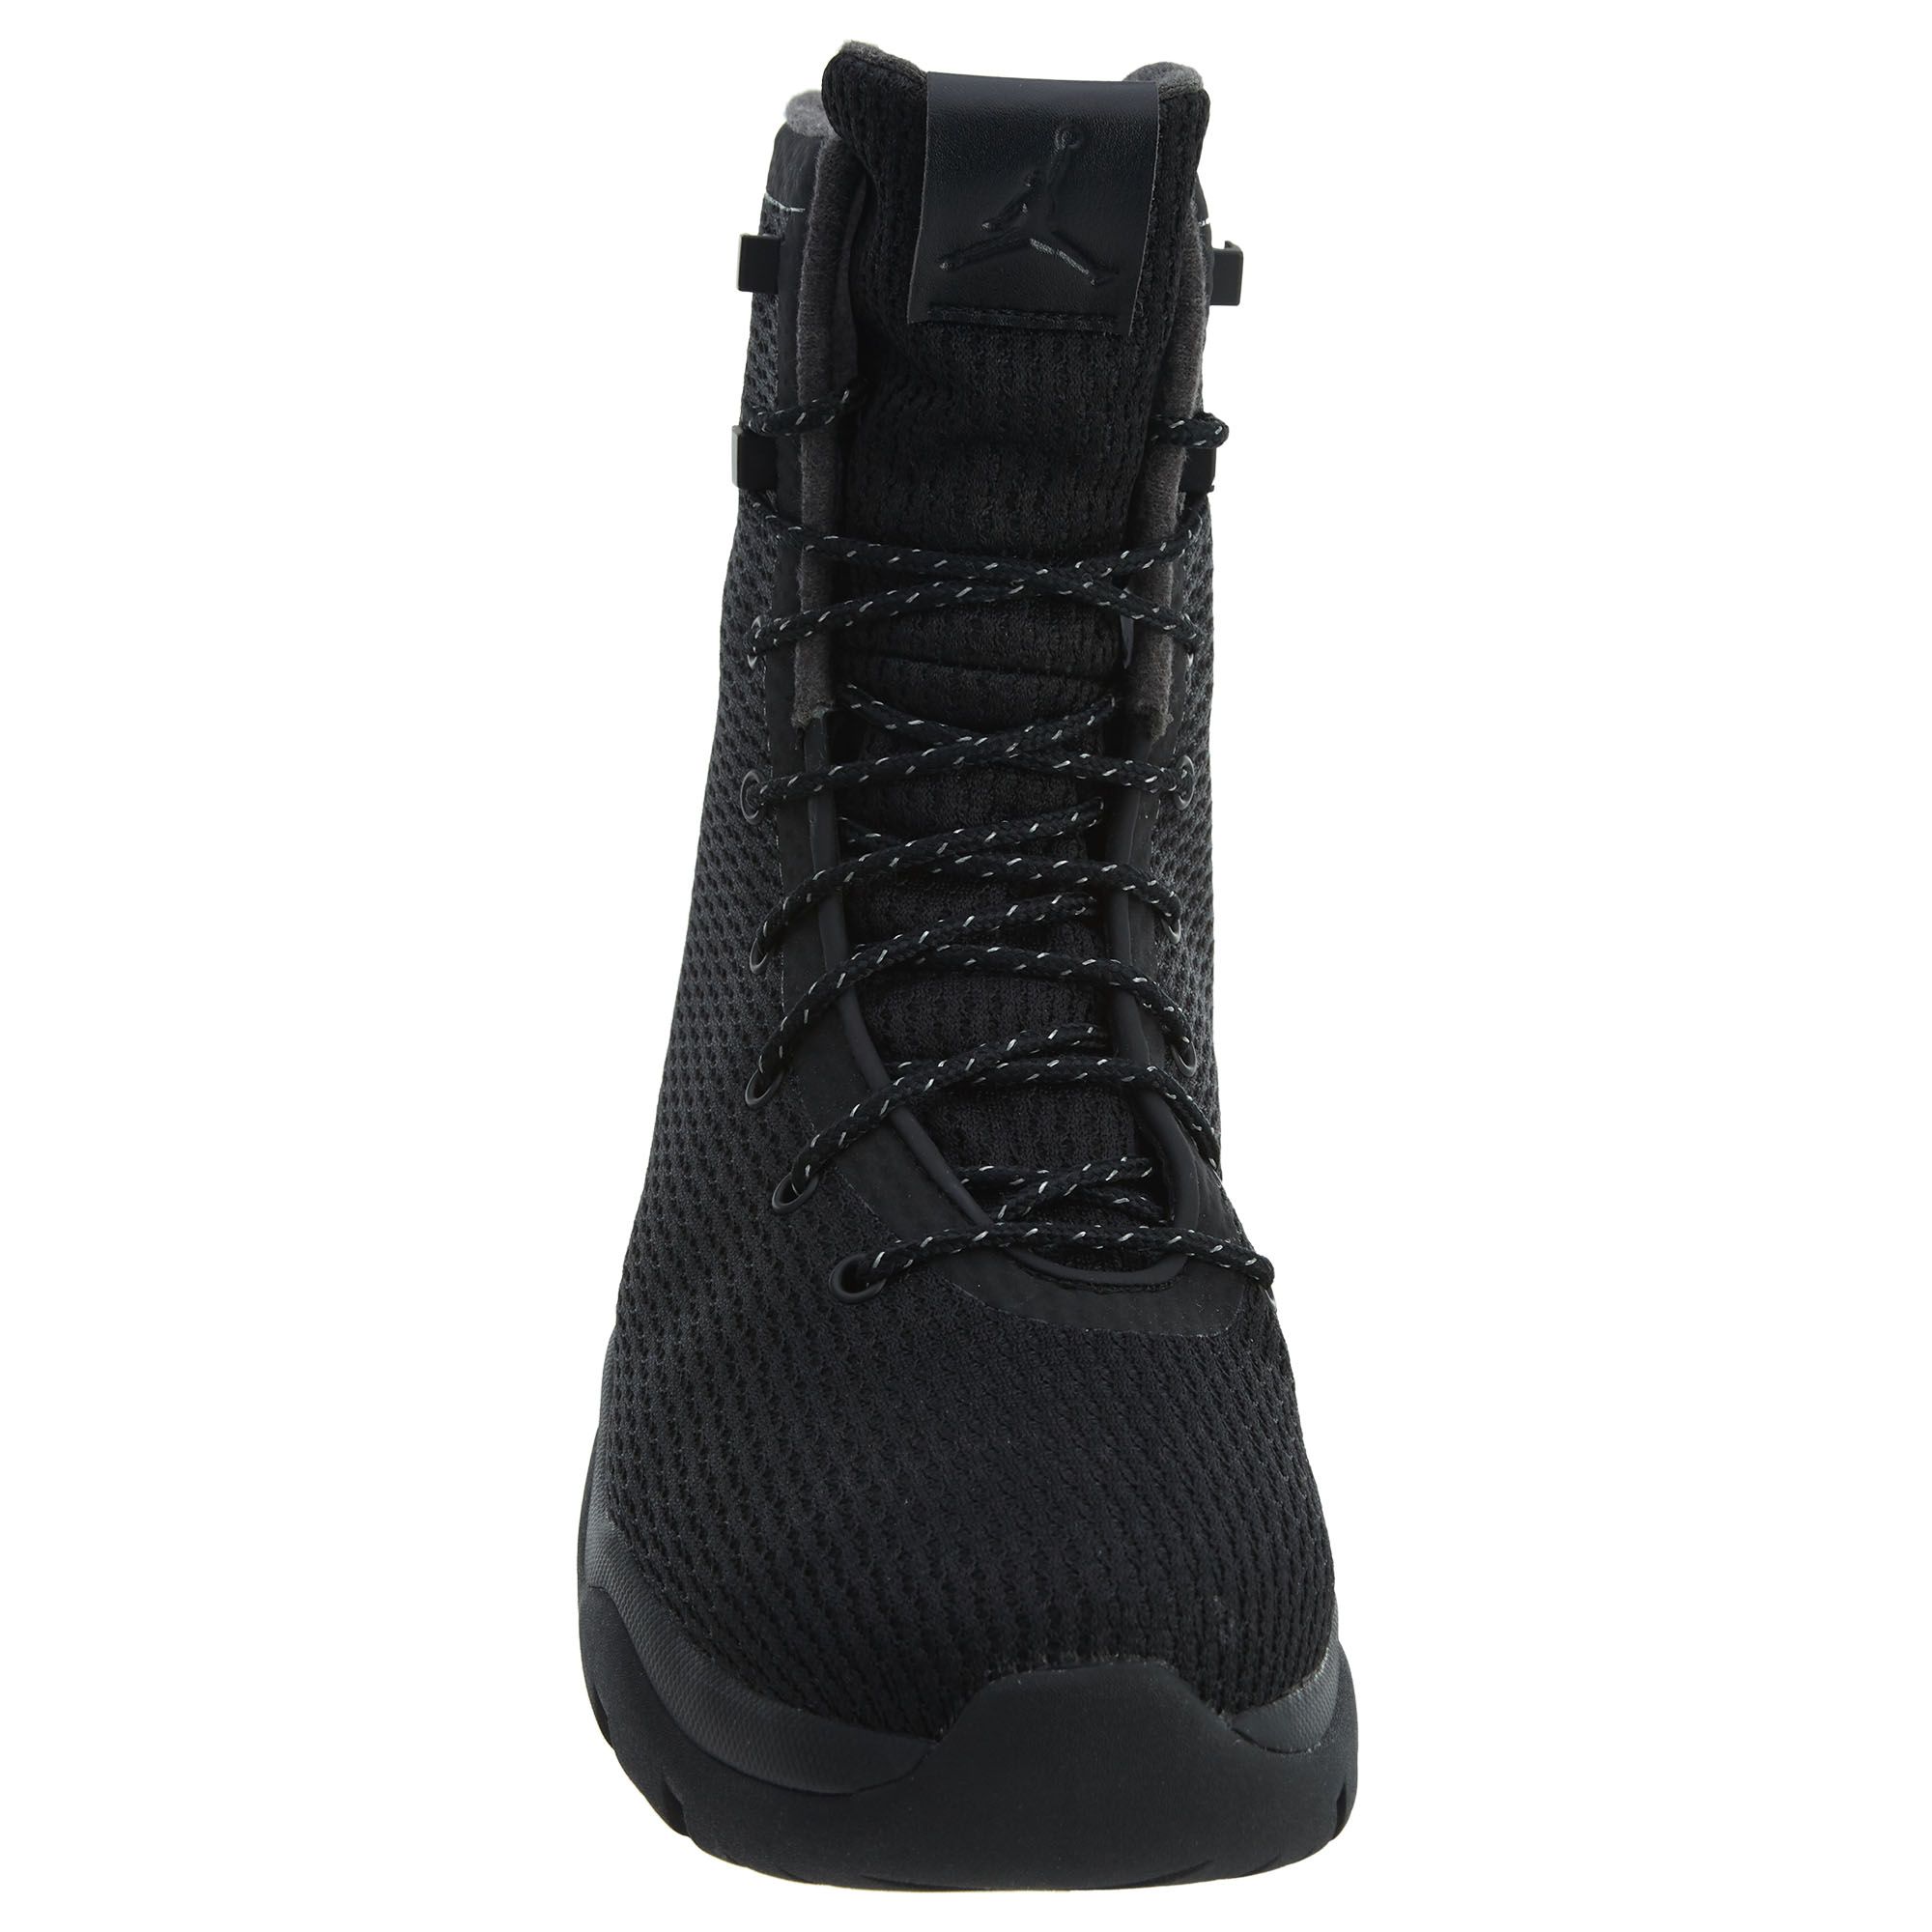 jordan future boots black